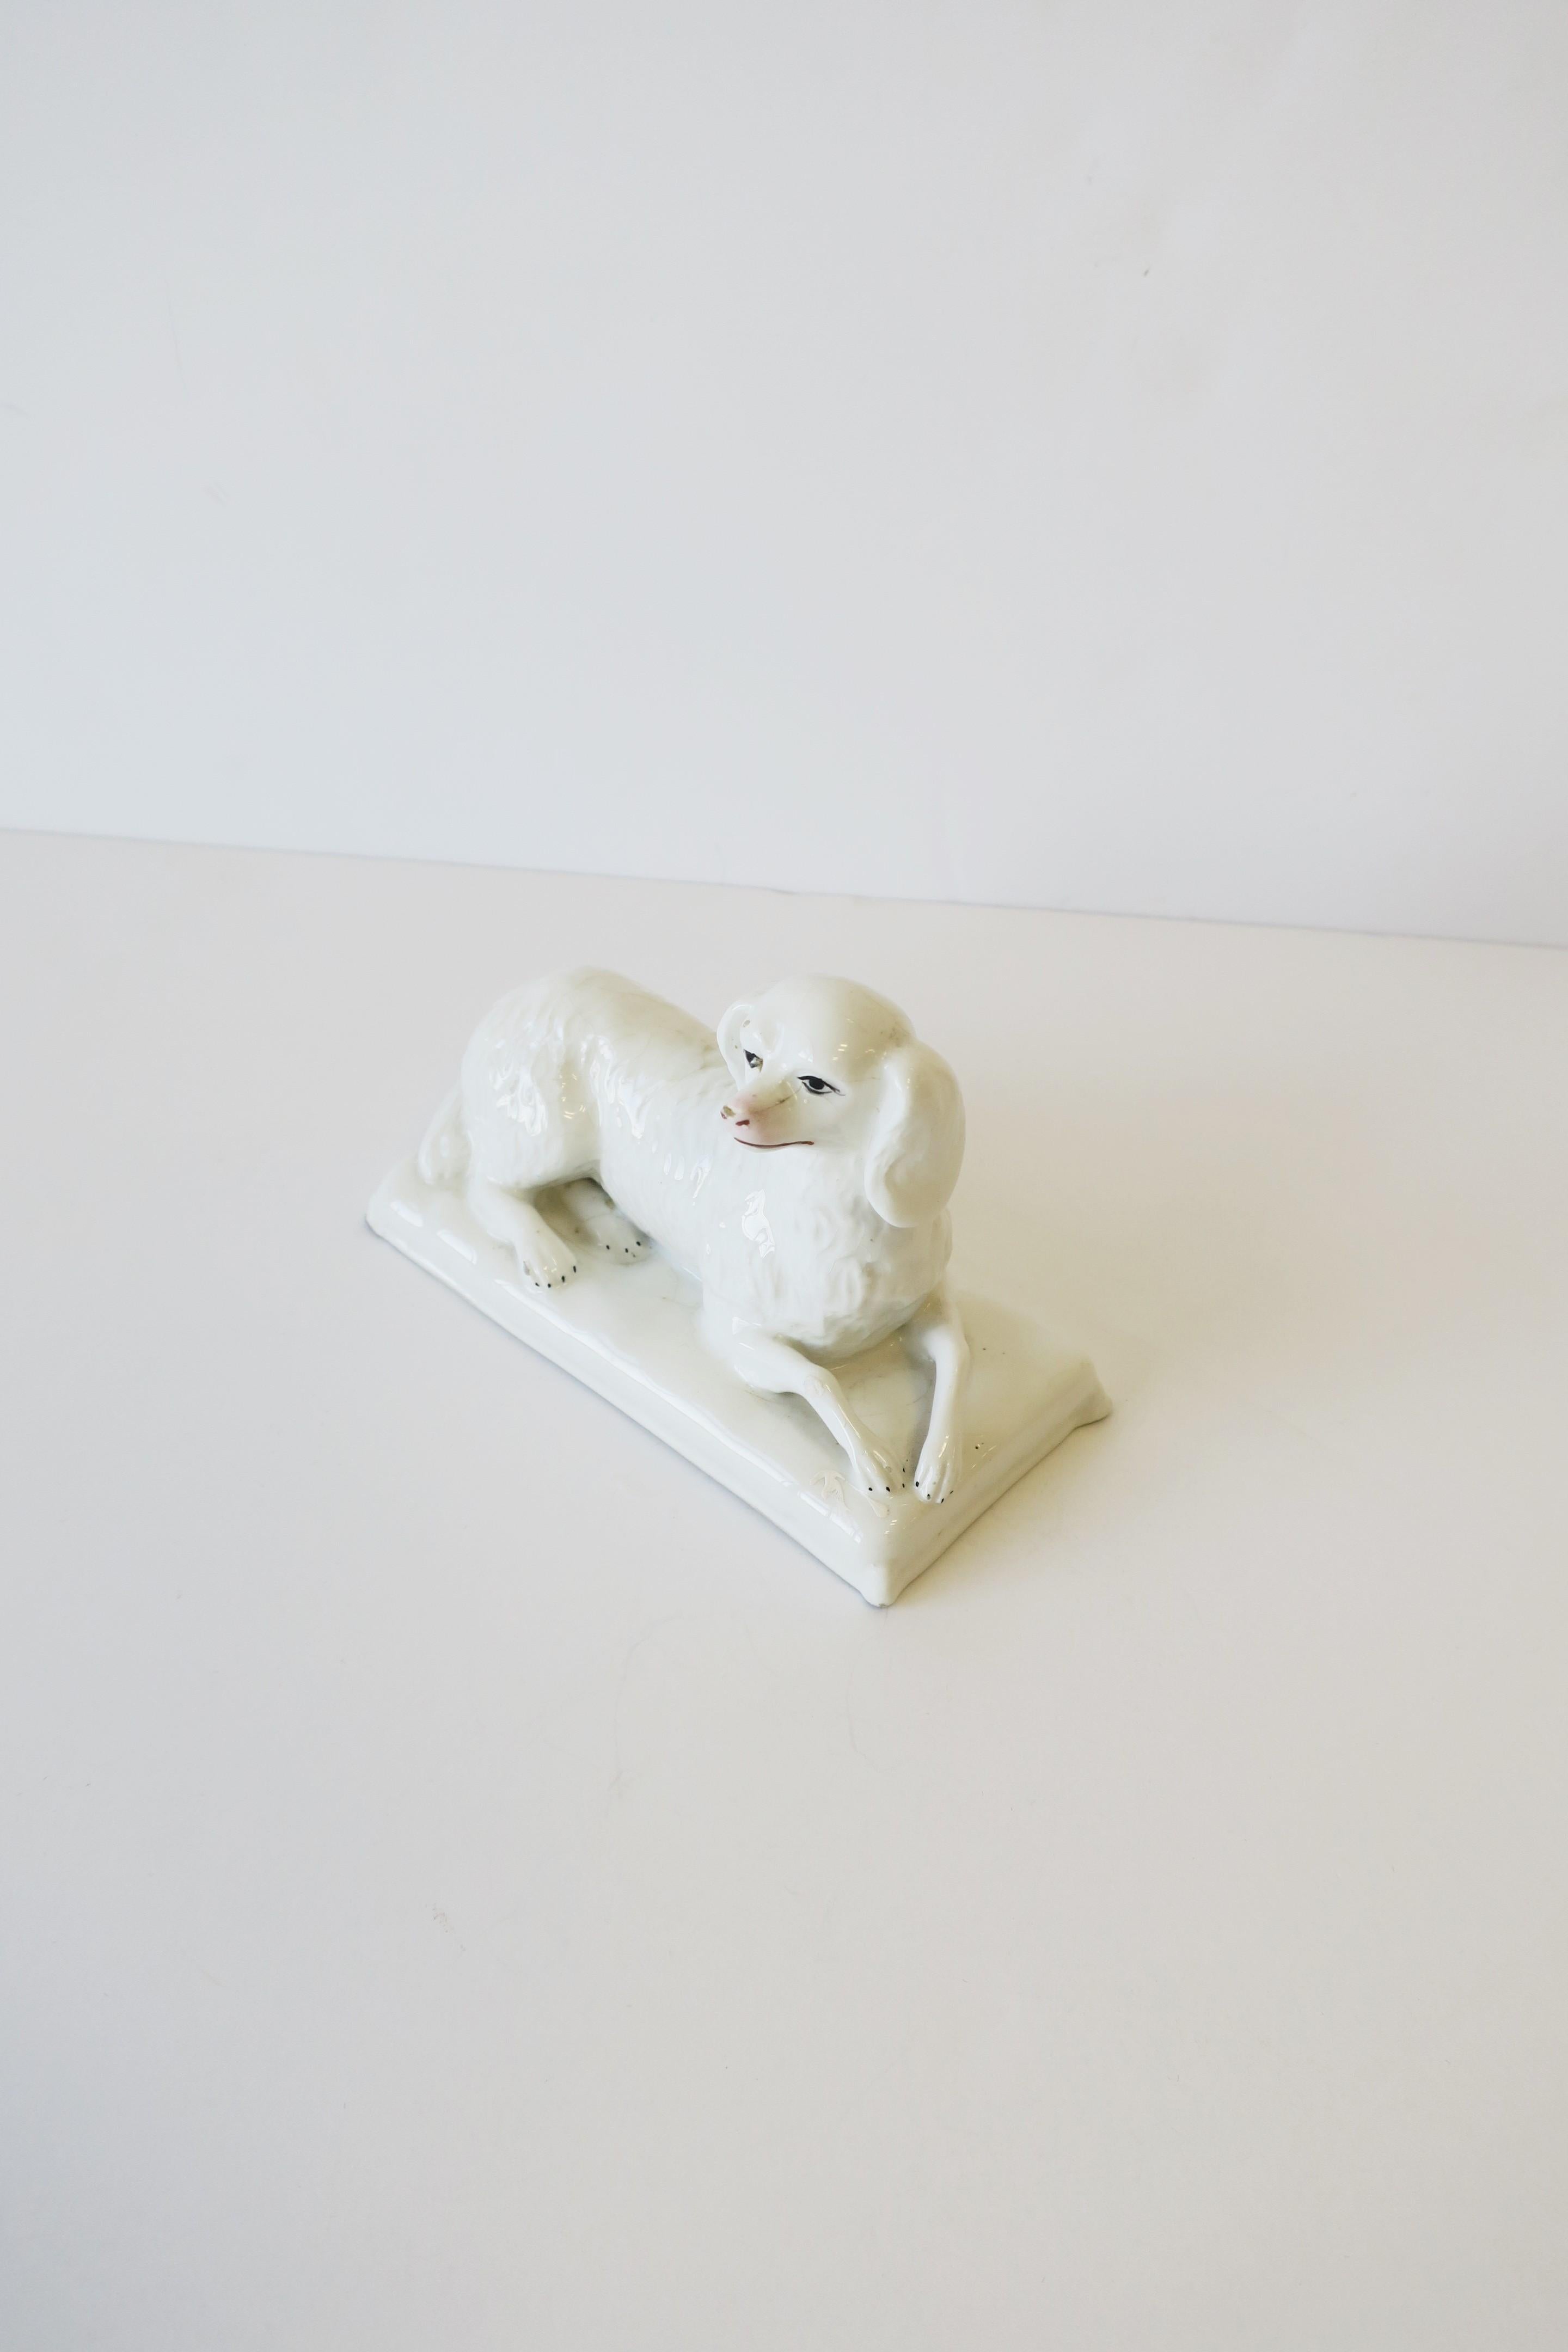 white porcelain dog statue